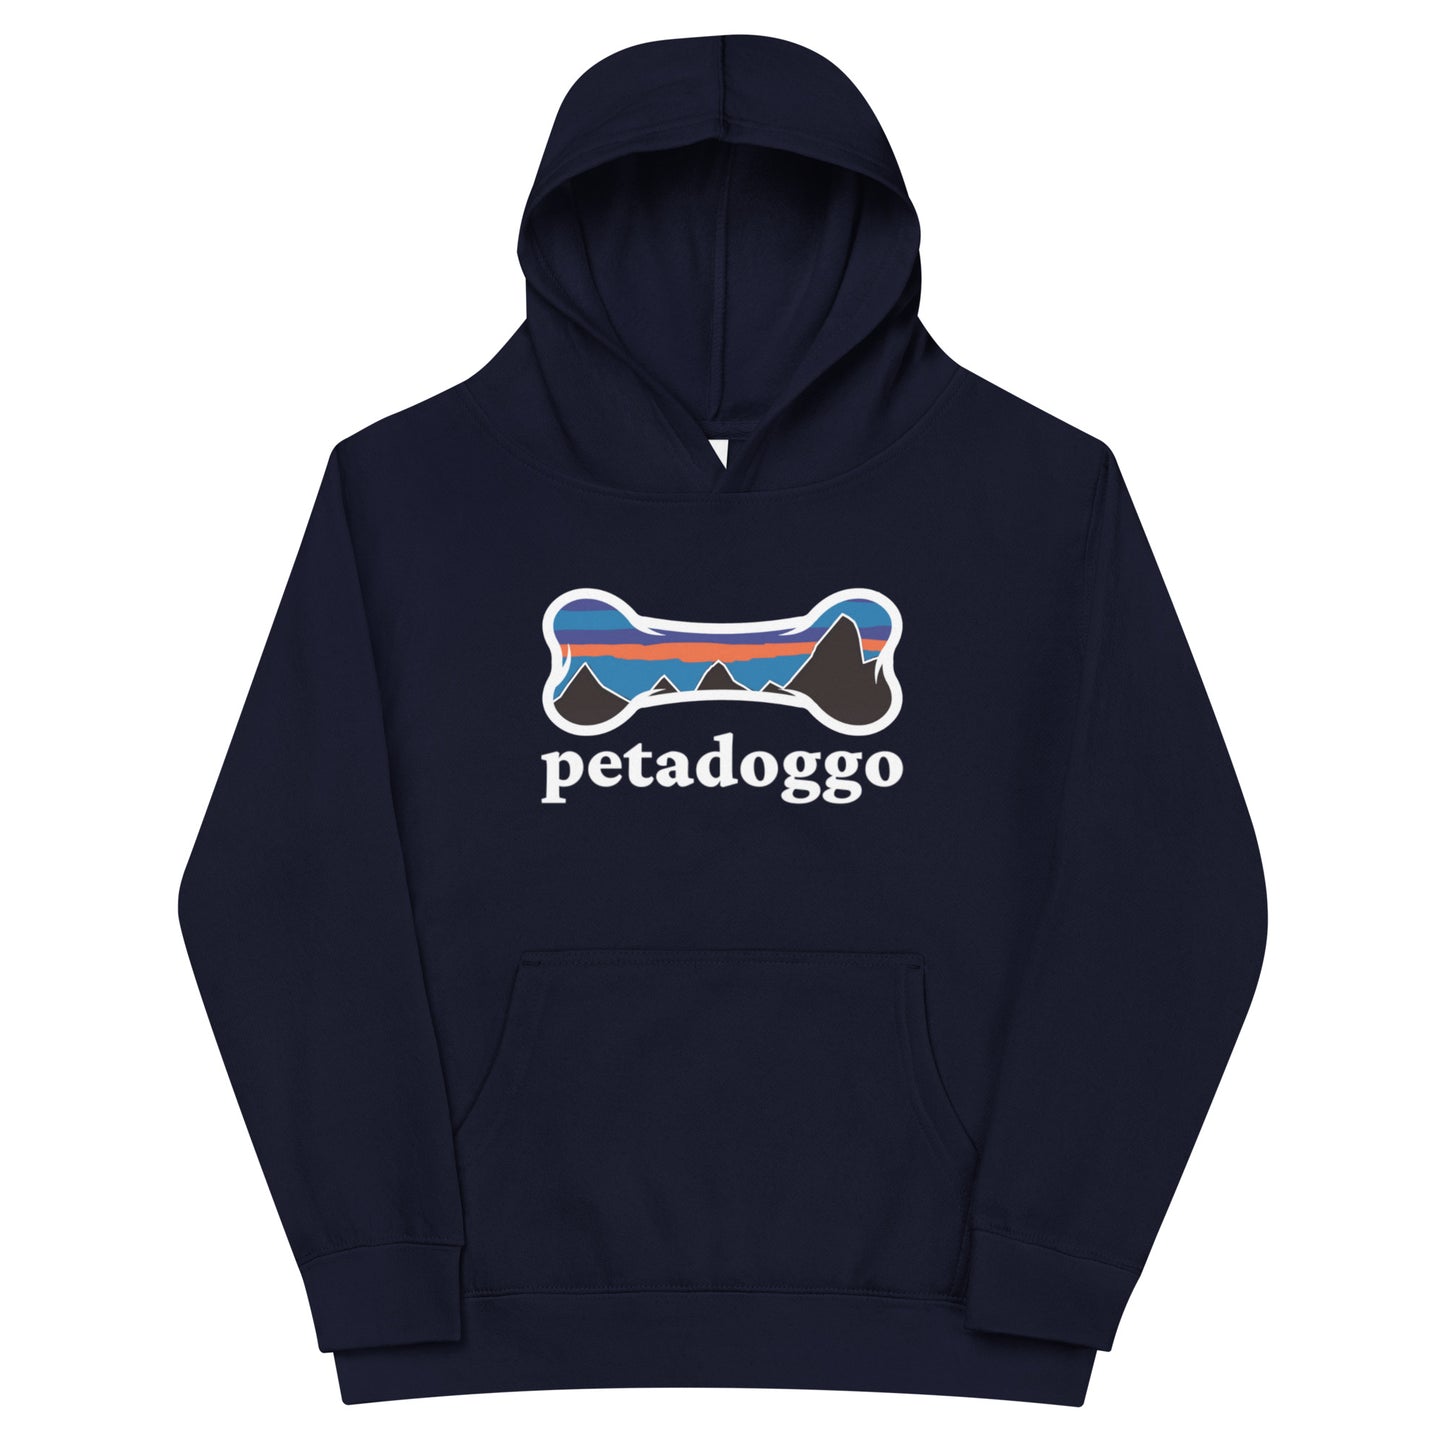 Petadoggo Kids fleece hoodie